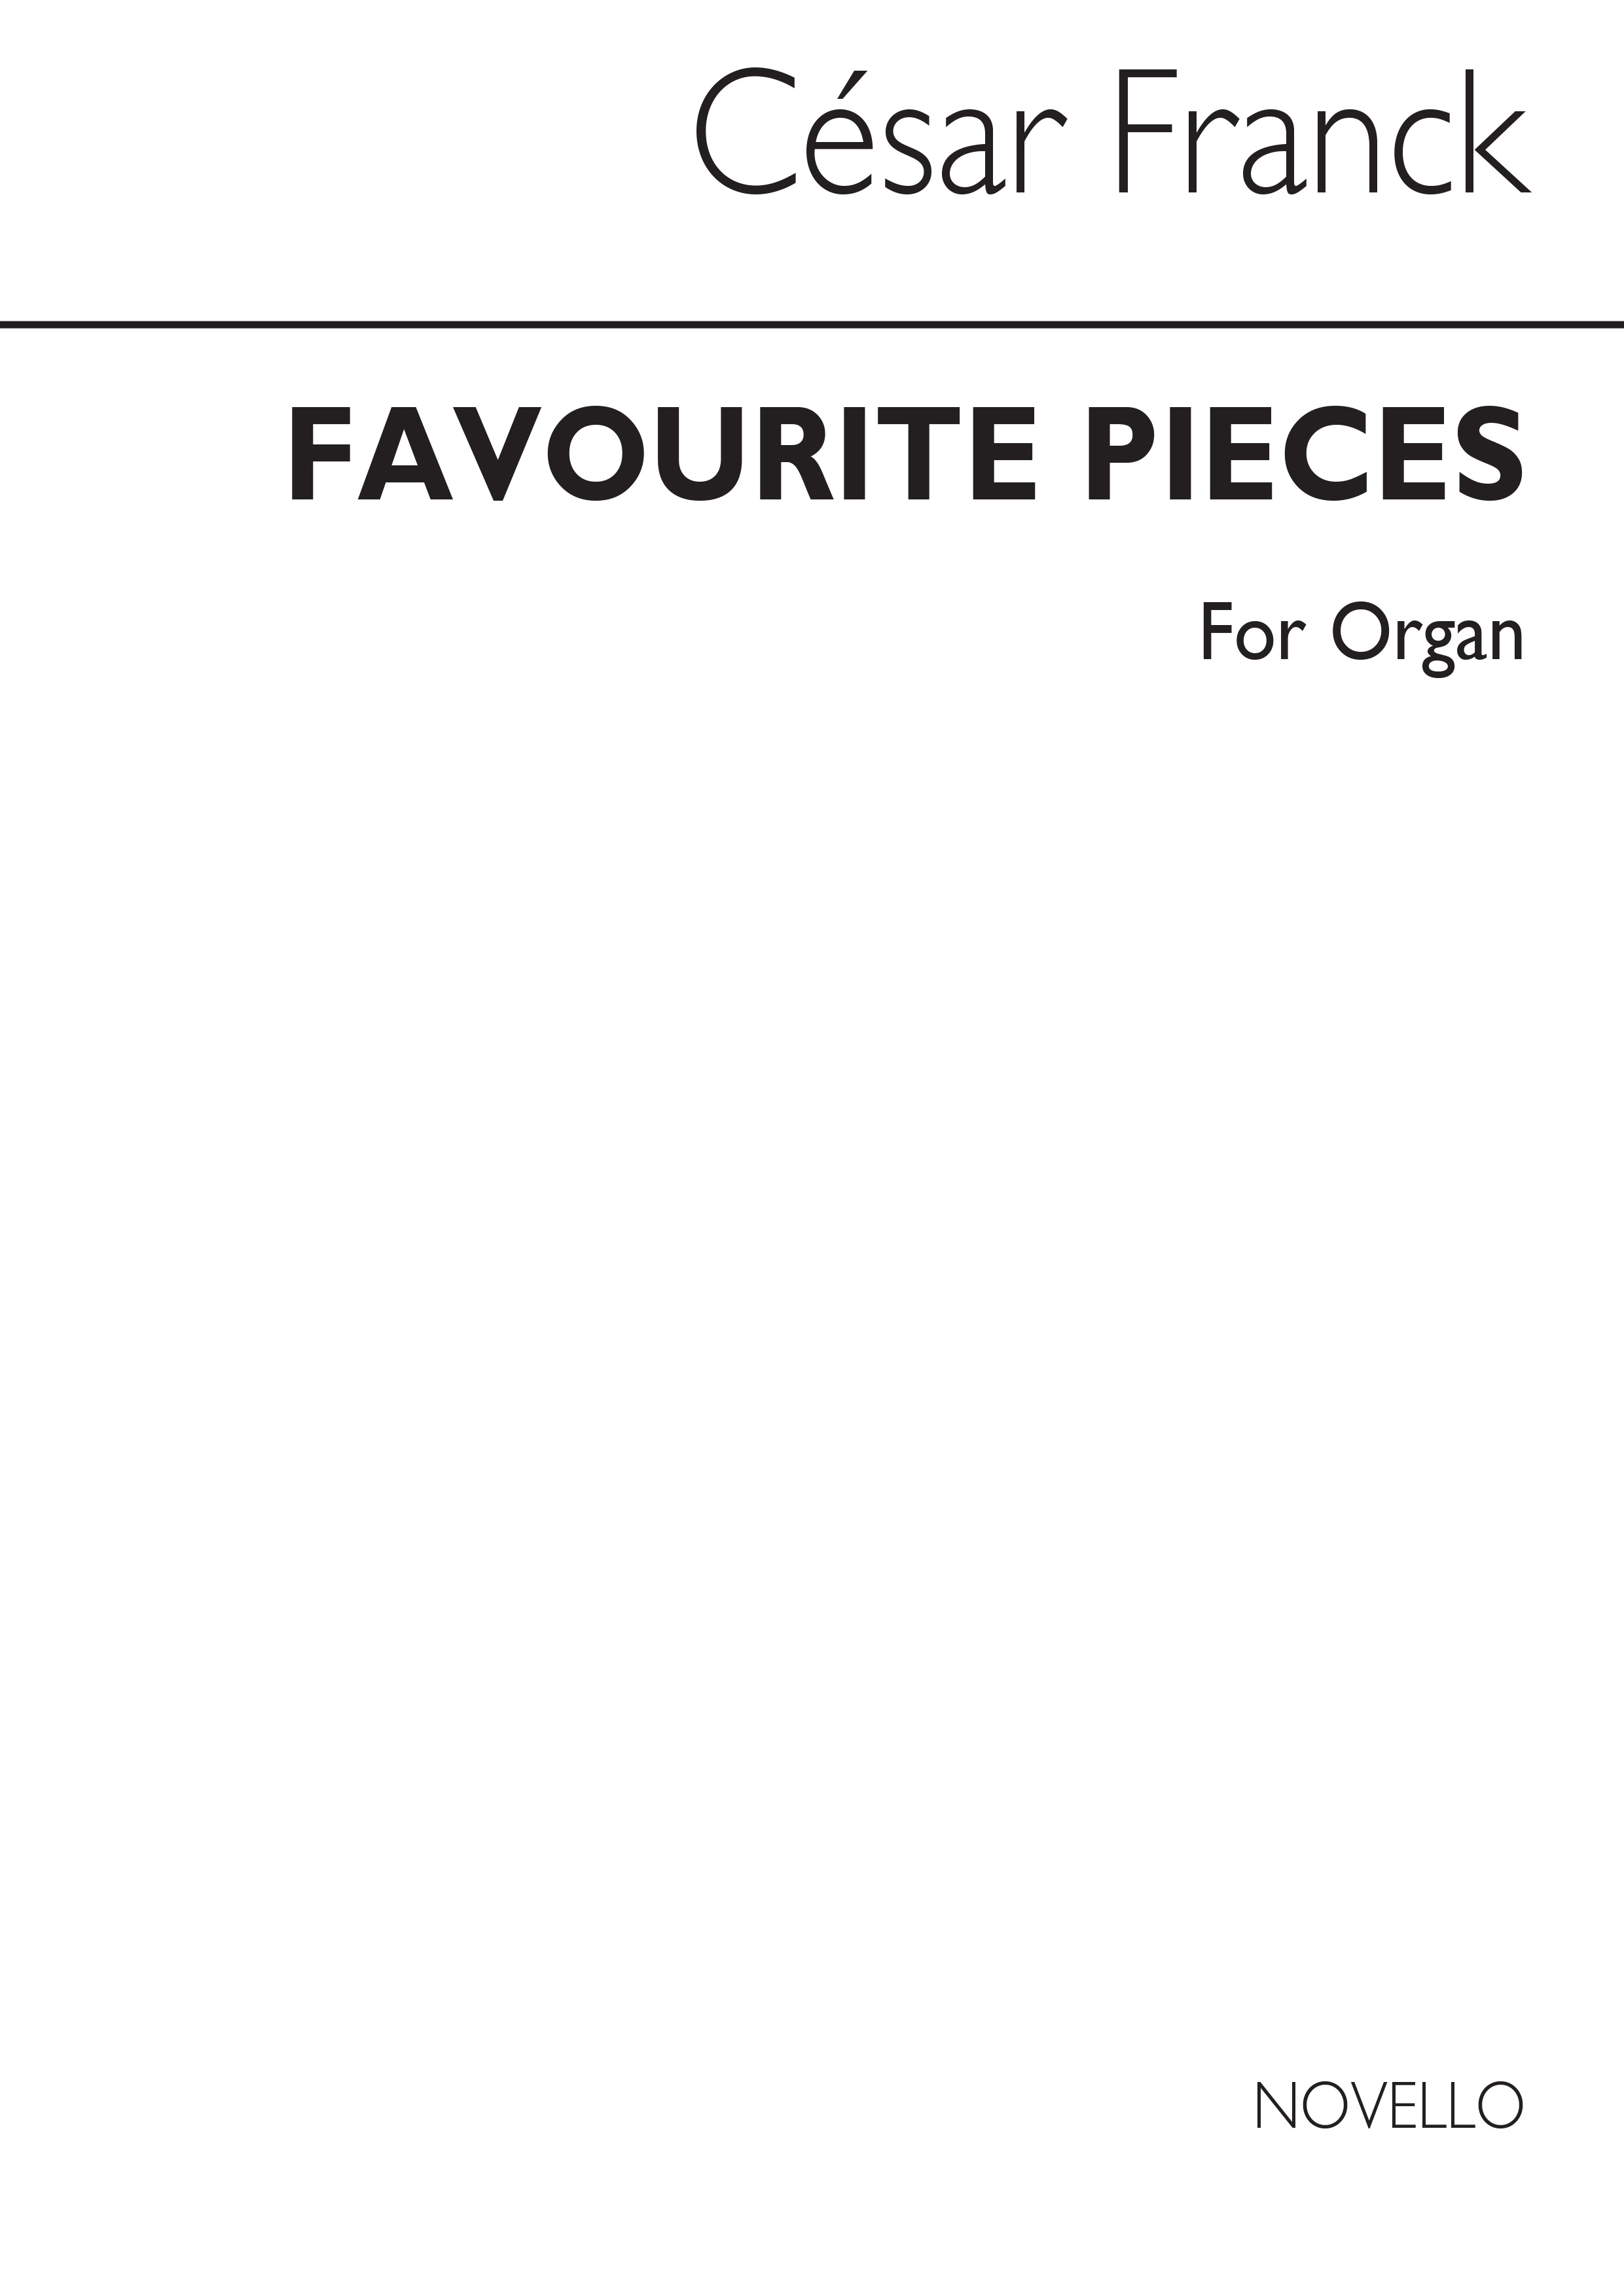 Csar Franck: Favourite Pieces For Organ Book 1: Organ: Instrumental Album